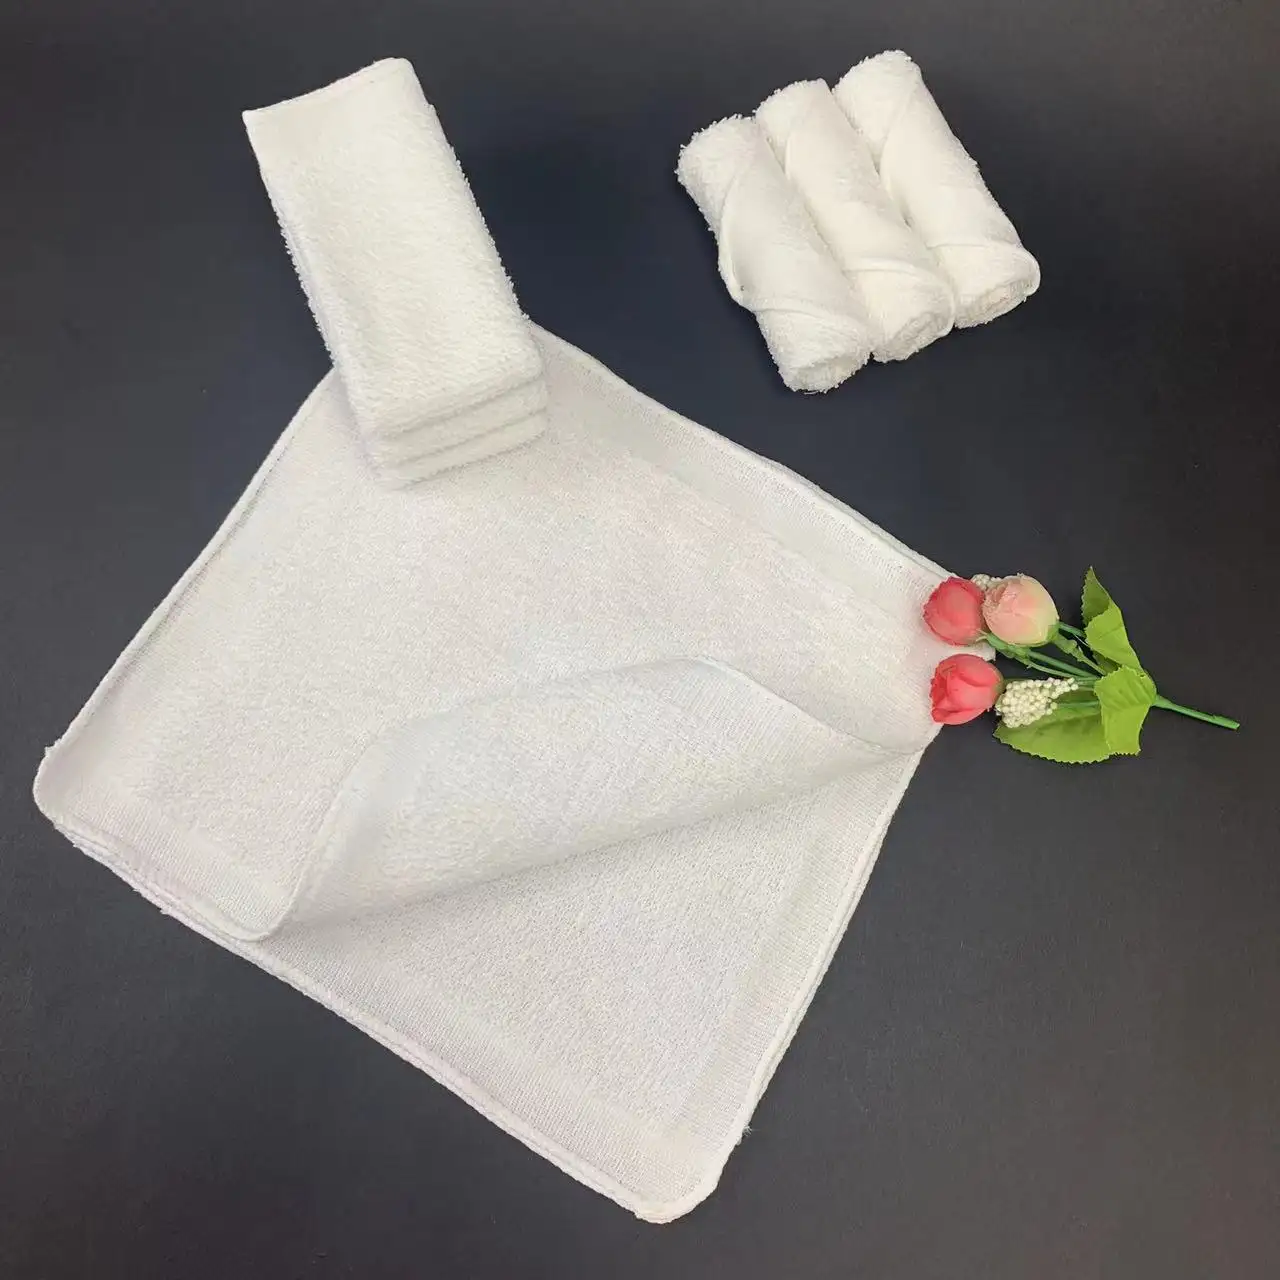 Asciugamani da cucina usa e getta oshibori sfusi asciutti per la linea di produzione di asciugamani bagnati